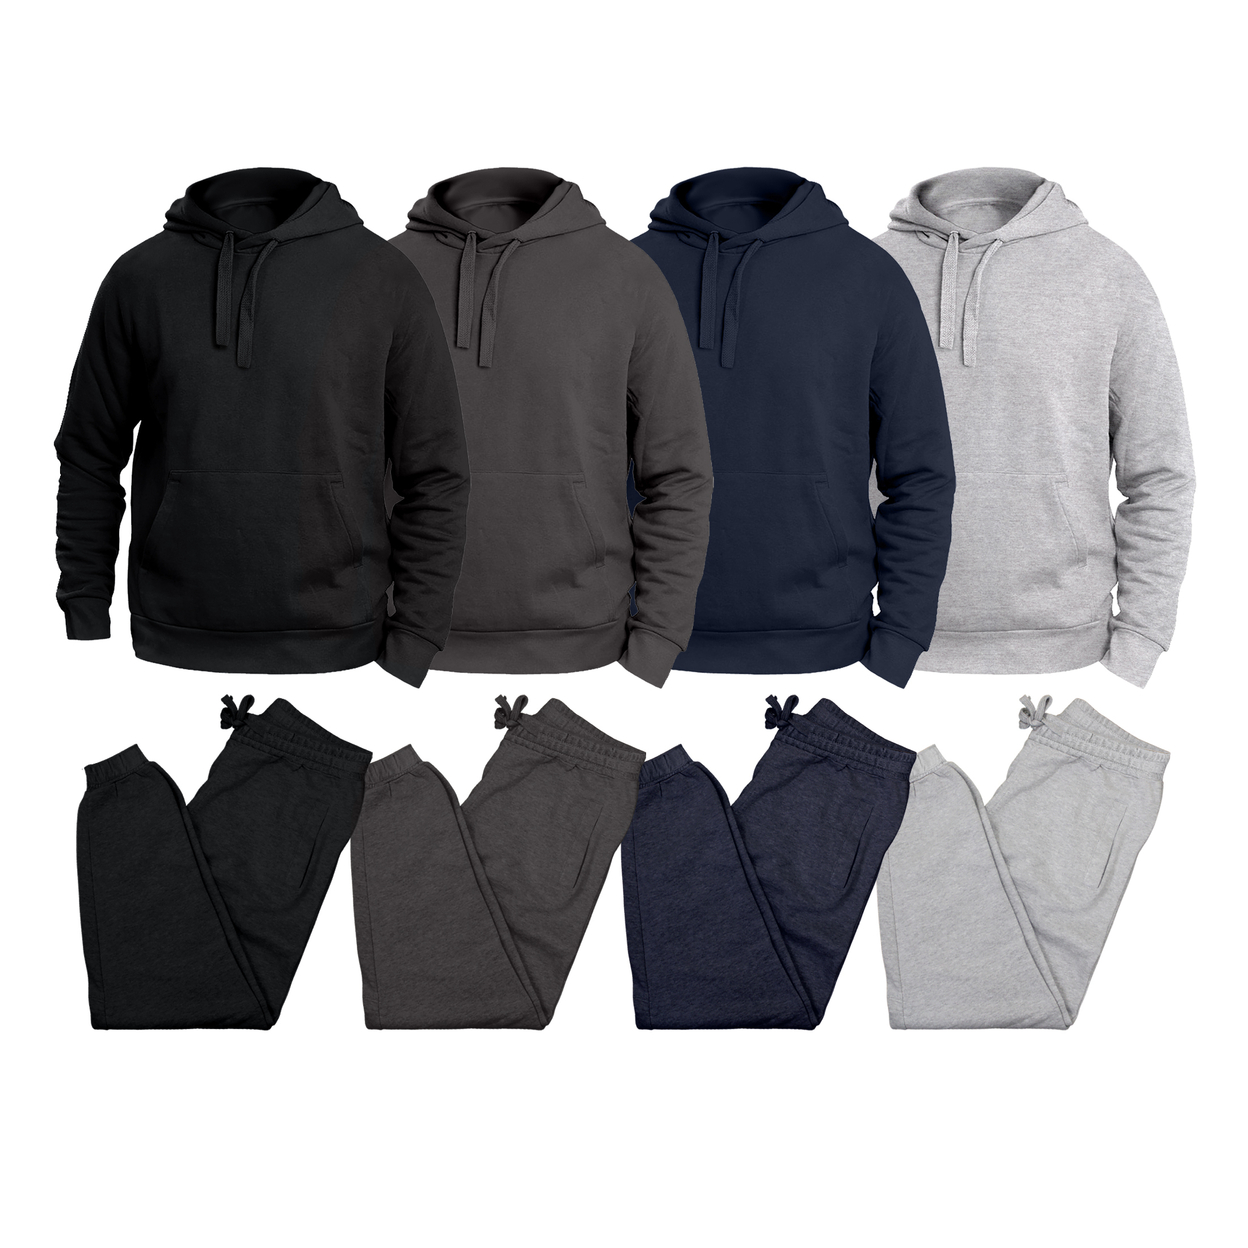 Men's Big & Tall Winter Warm Cozy Athletic Fleece Lined Multi-Pocket Cargo Sweatsuit - Grey, X-large